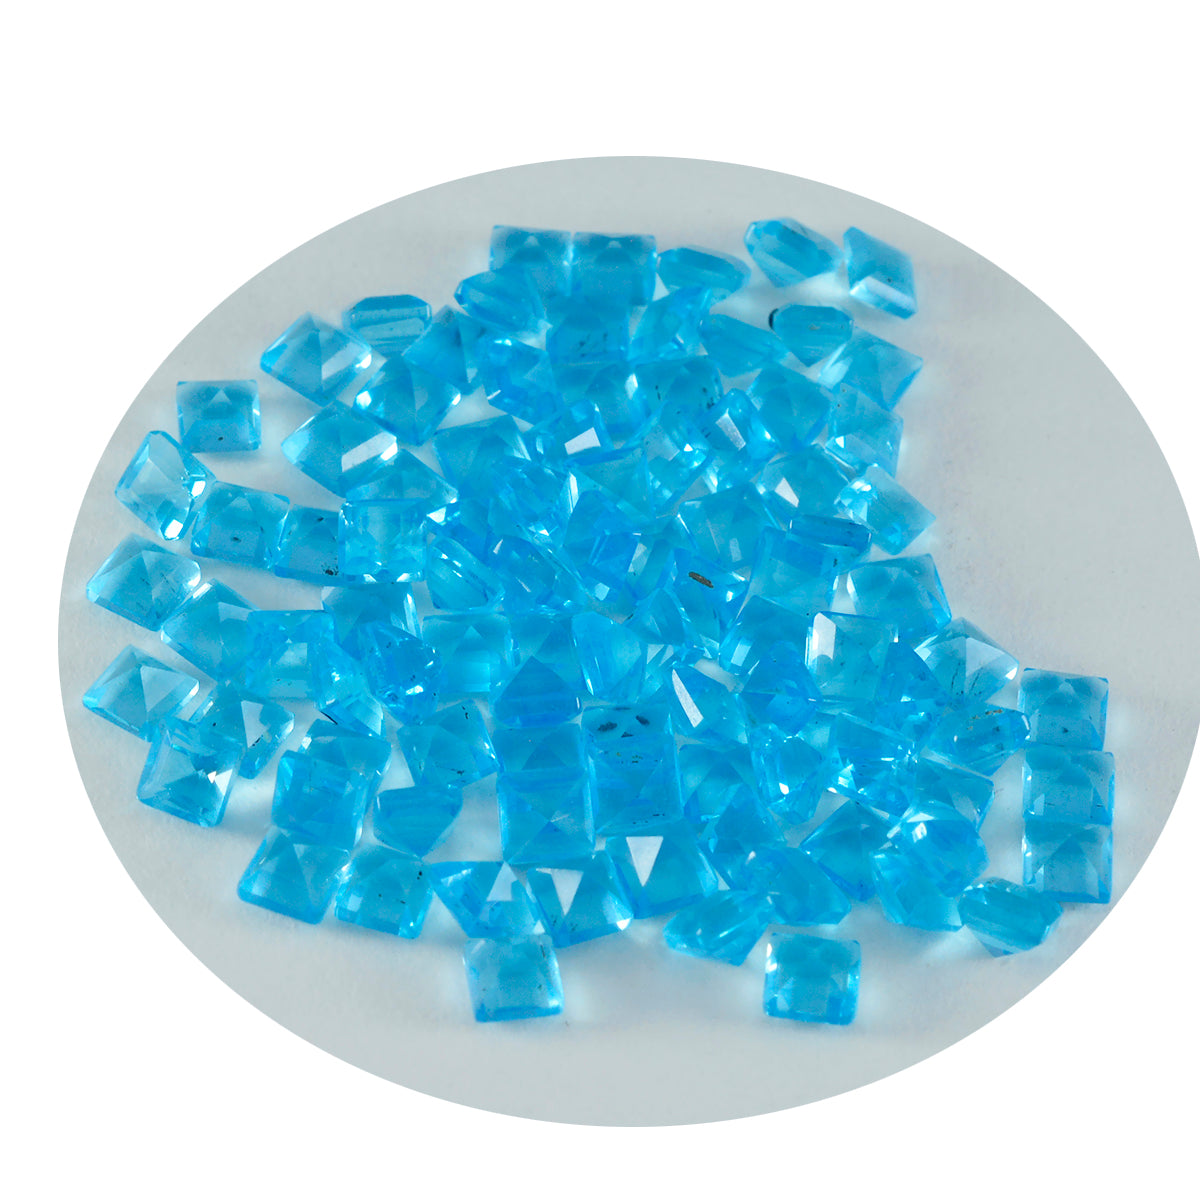 Riyogems 1PC Blue Topaz CZ Faceted 4x4 mm Square Shape Nice Quality Loose Gemstone